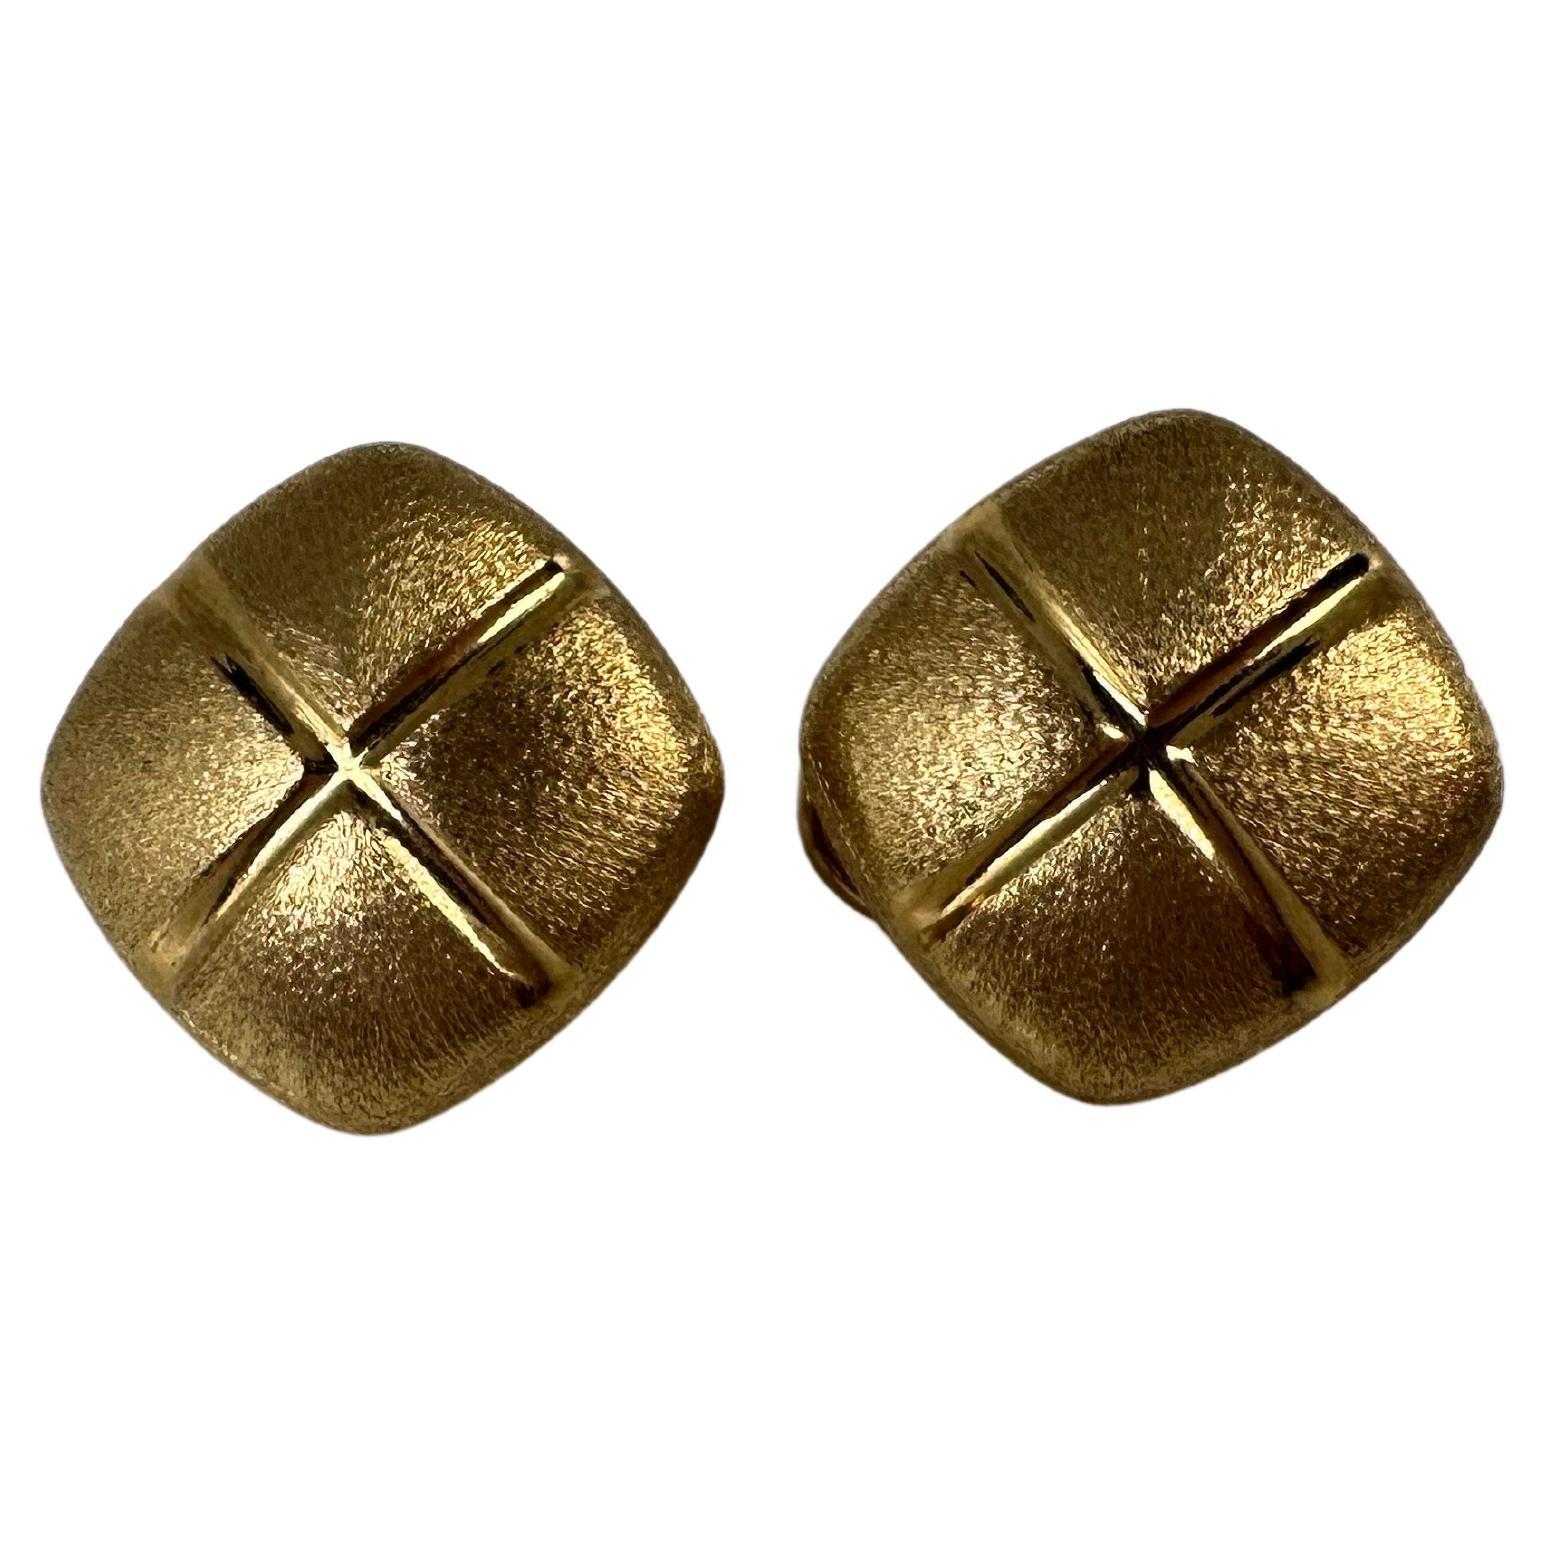 Button square gold earrings 18KT omega closure abrasive polish design For Sale